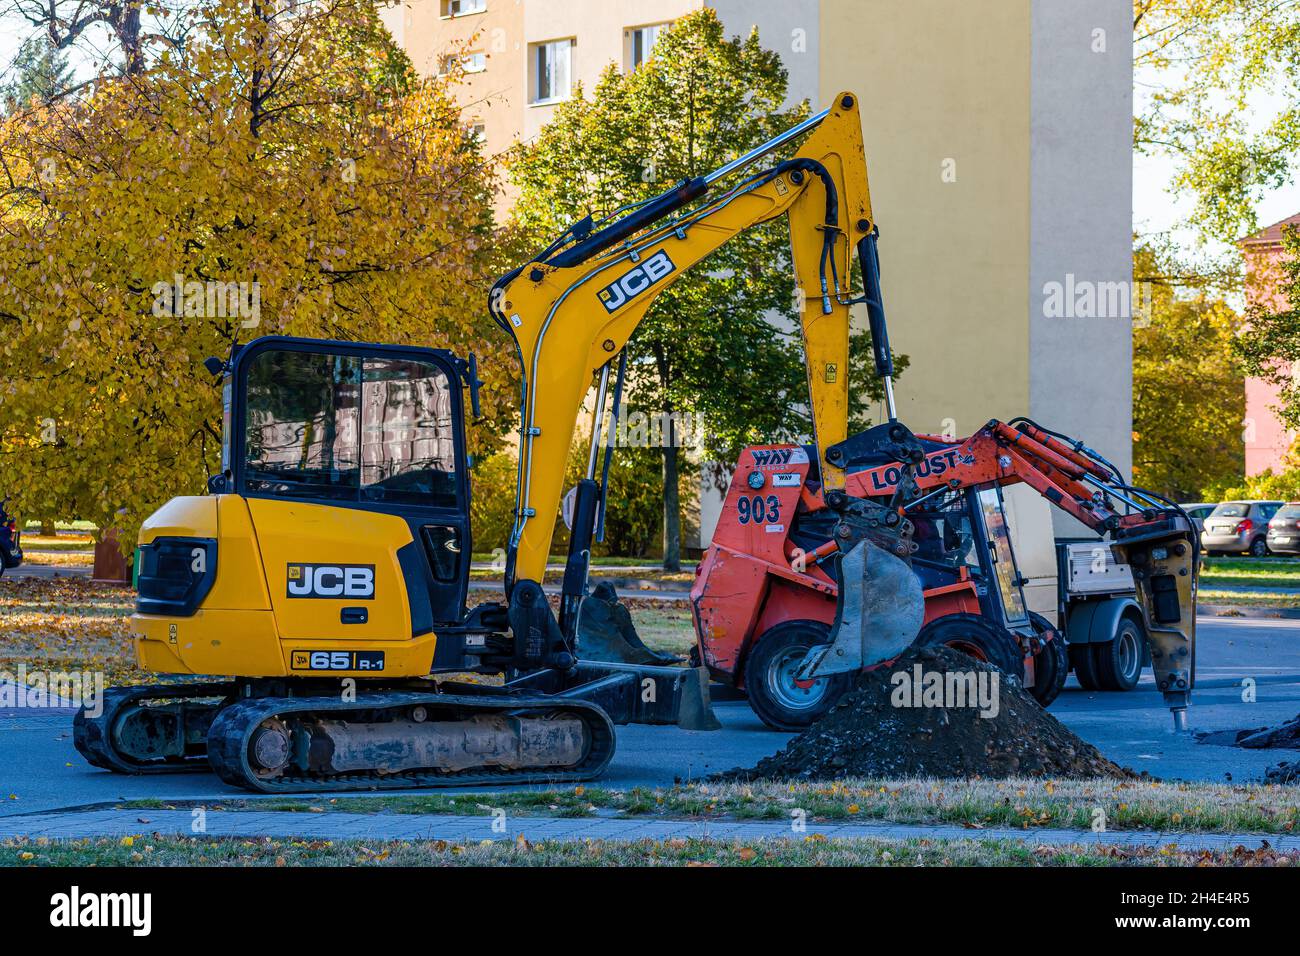 HODONIN, CZECH REPUBLIC - Oct 26, 2021: Belt excavator JCB 65 and shear loader Locust 903 at work on the road Stock Photo